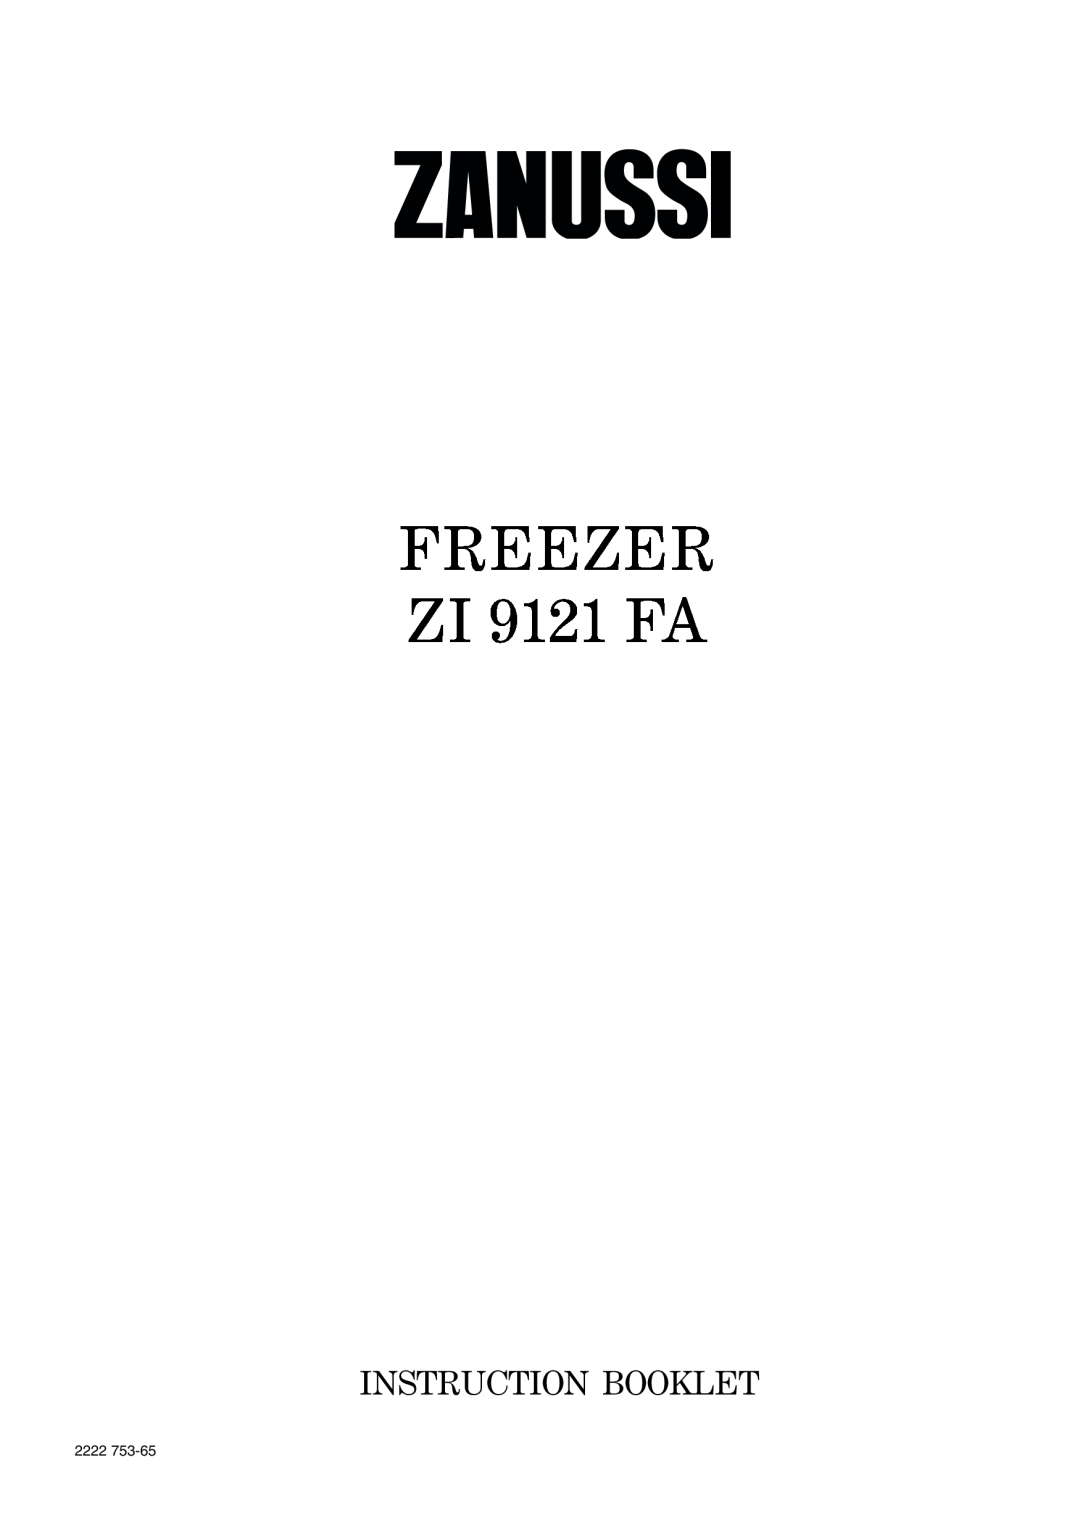 Zanussi manual FREEZER ZI 9121 FA, Instruction Booklet, 2222 